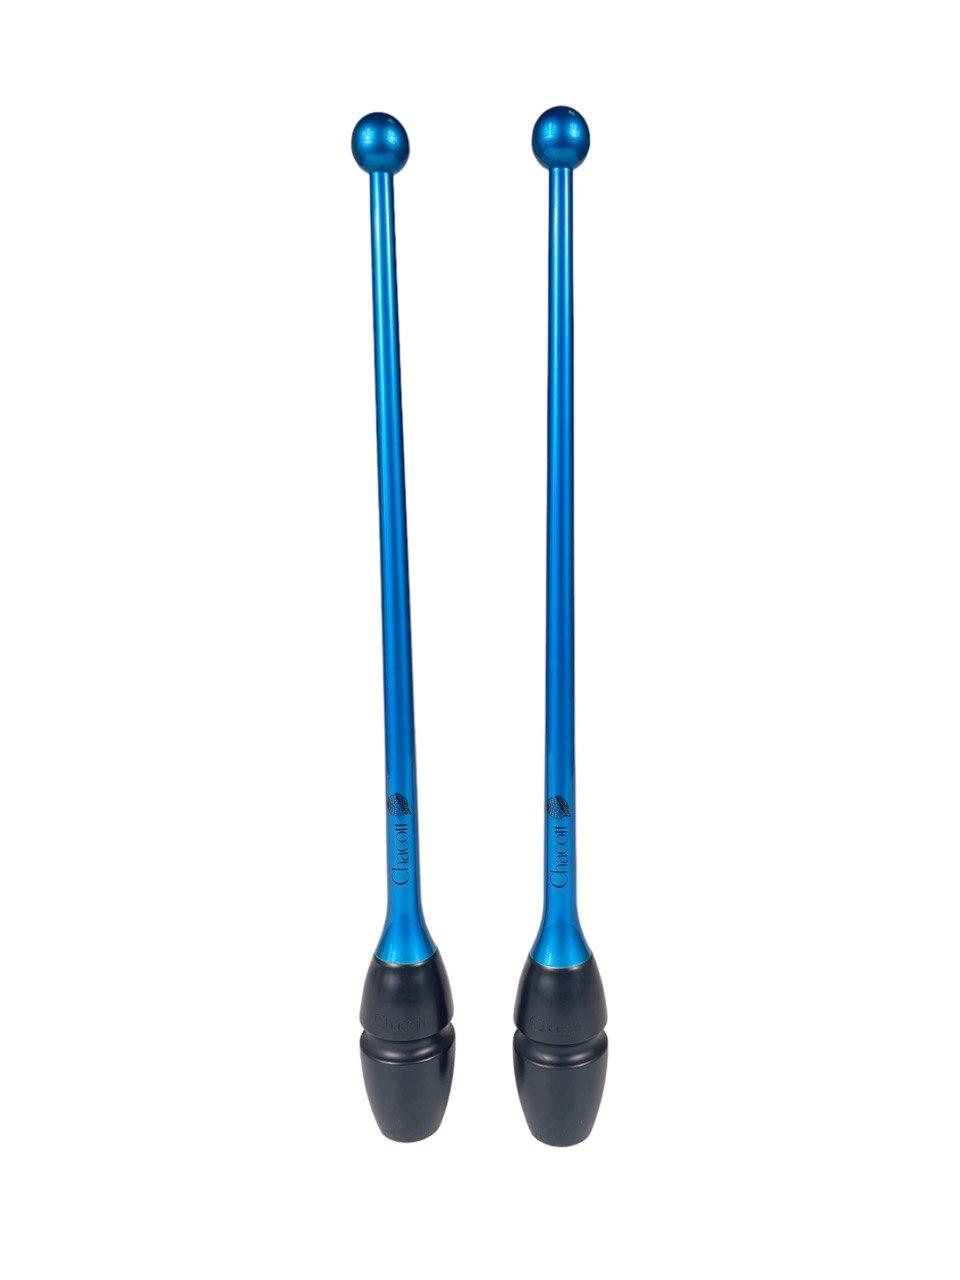 Булави для гімнастики 45 см. Hi-grip Rubber Clubs (455mm) Chacott FIG col. 123 Turquoise Blue